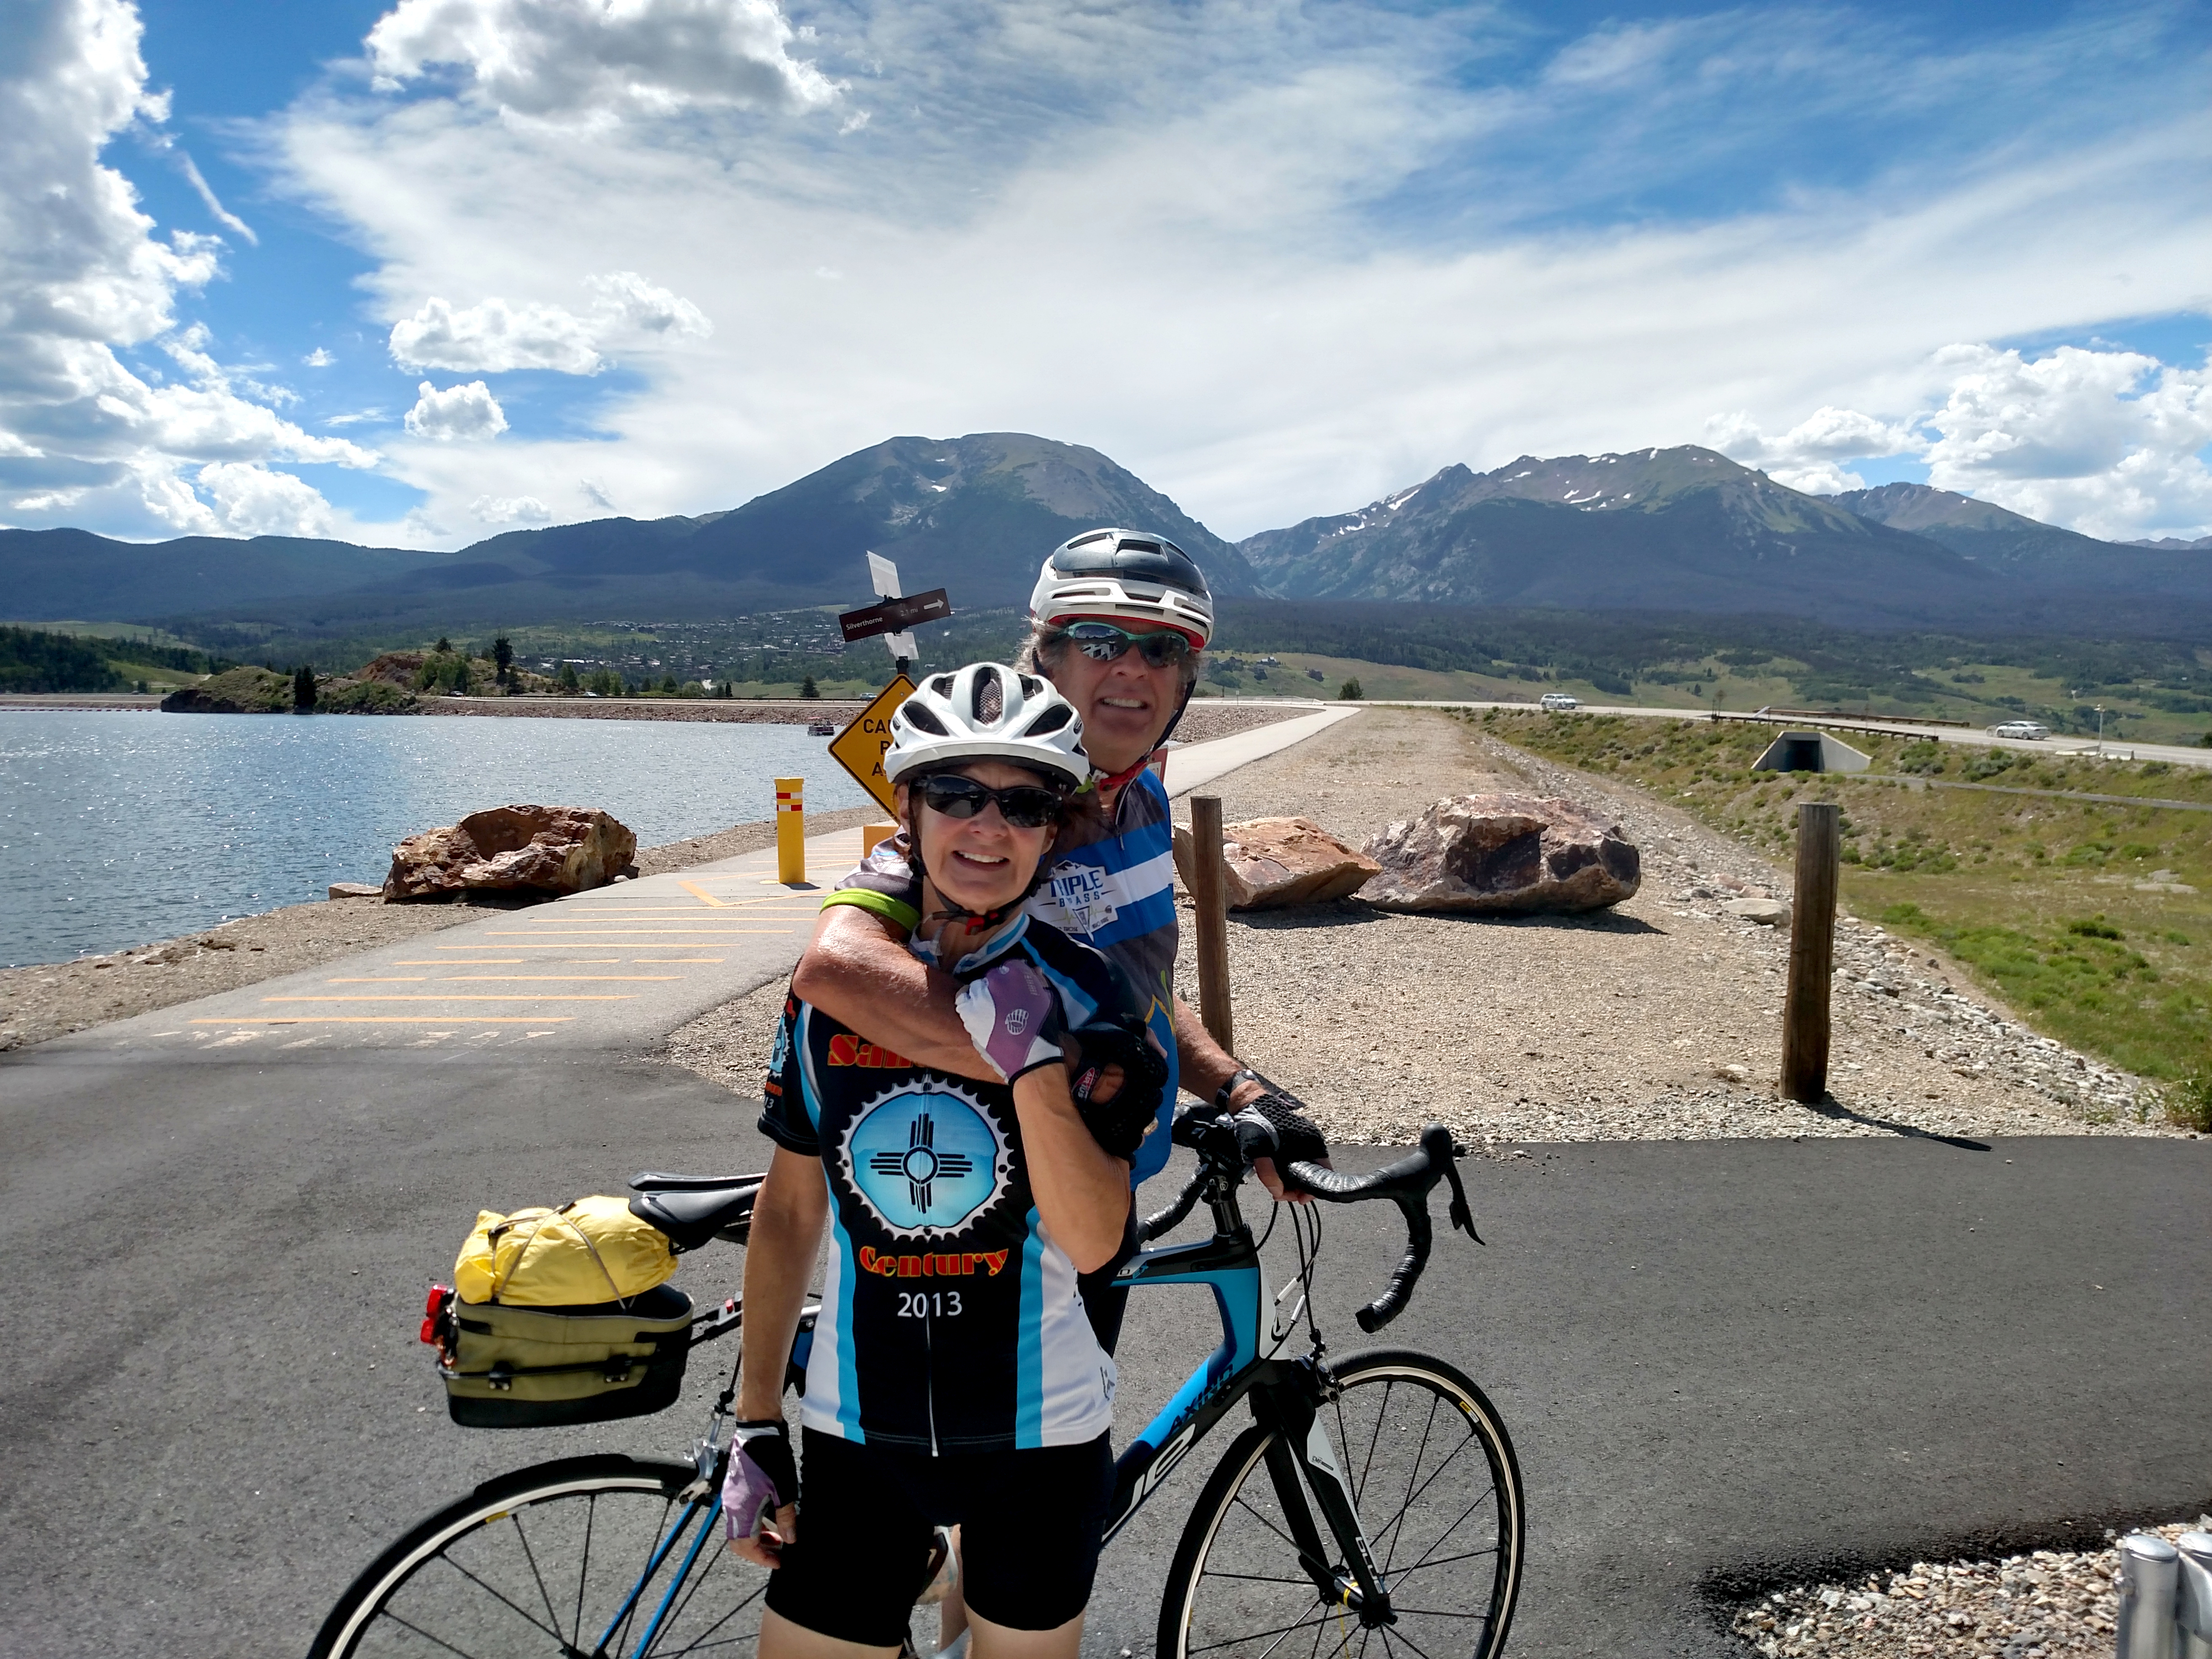 John and Rose Murphy enjoy the great Coloradan outdoors together via bike.